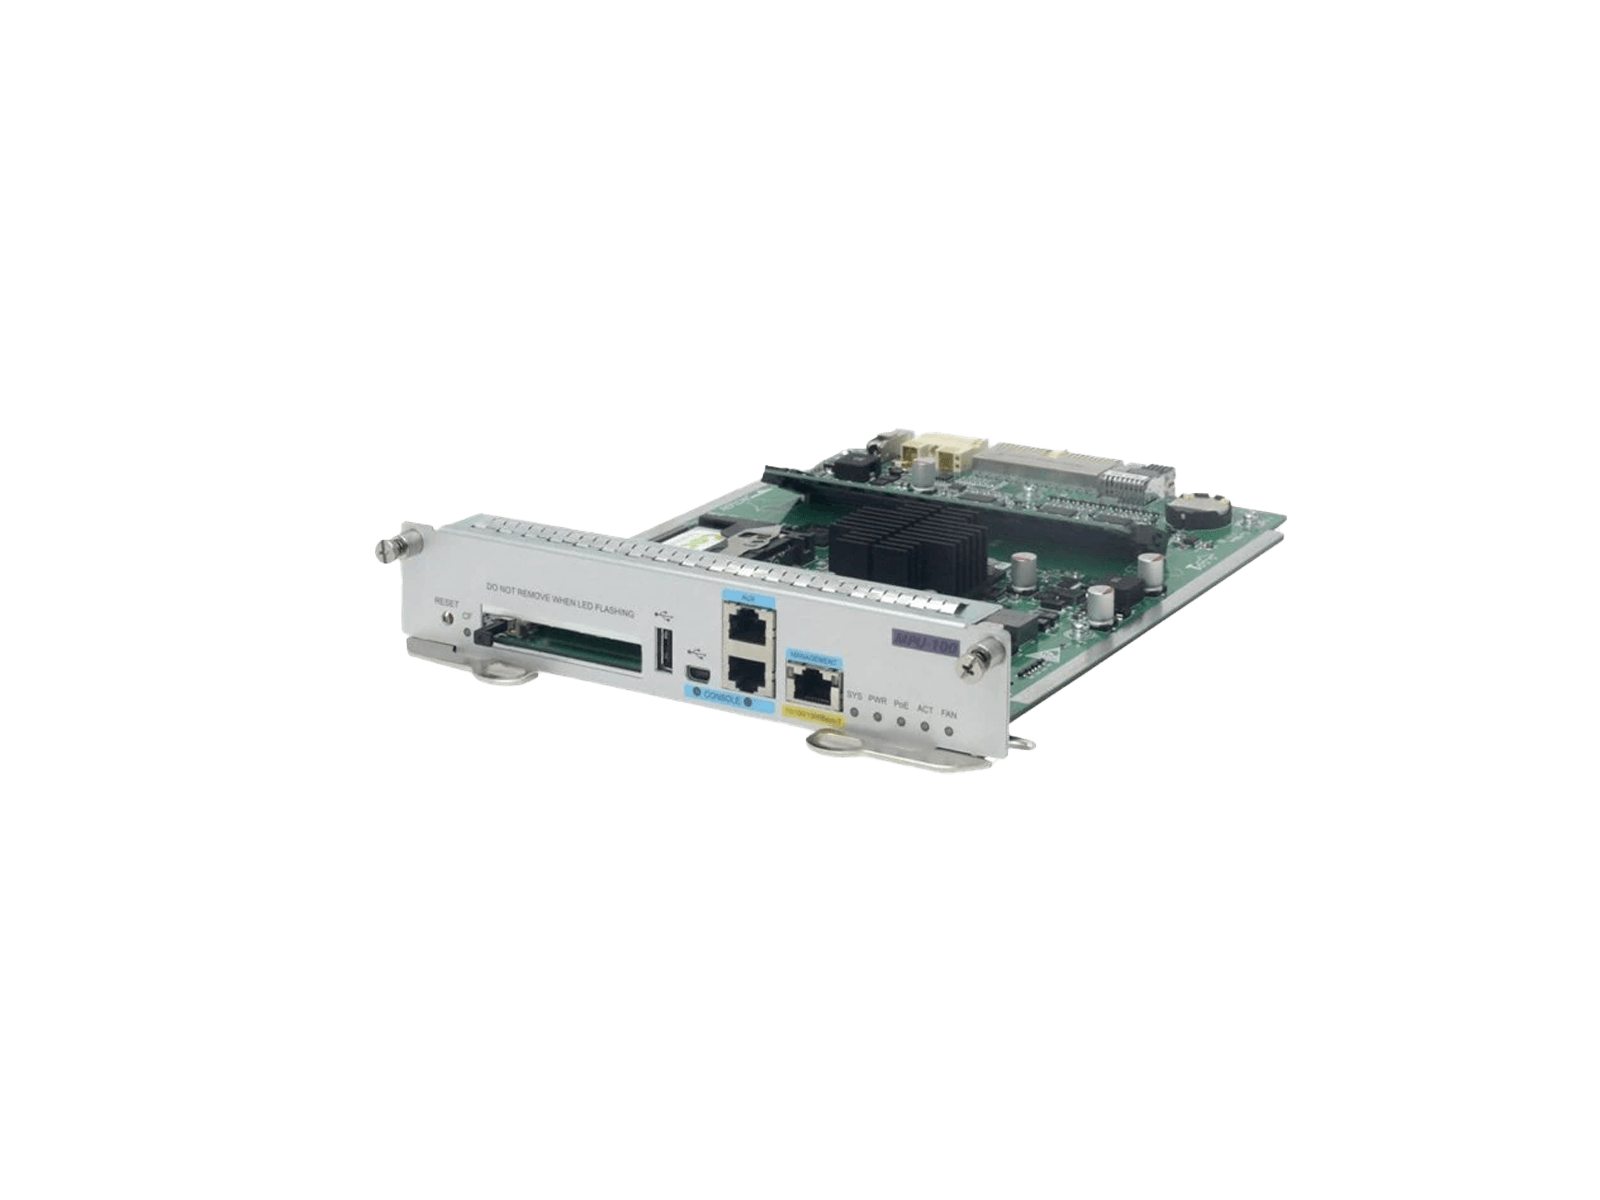 HPE JG412A FlexNetwork MSR4000 MPU-100 Main Processing Unit w/ Compact Flash Card Slot.